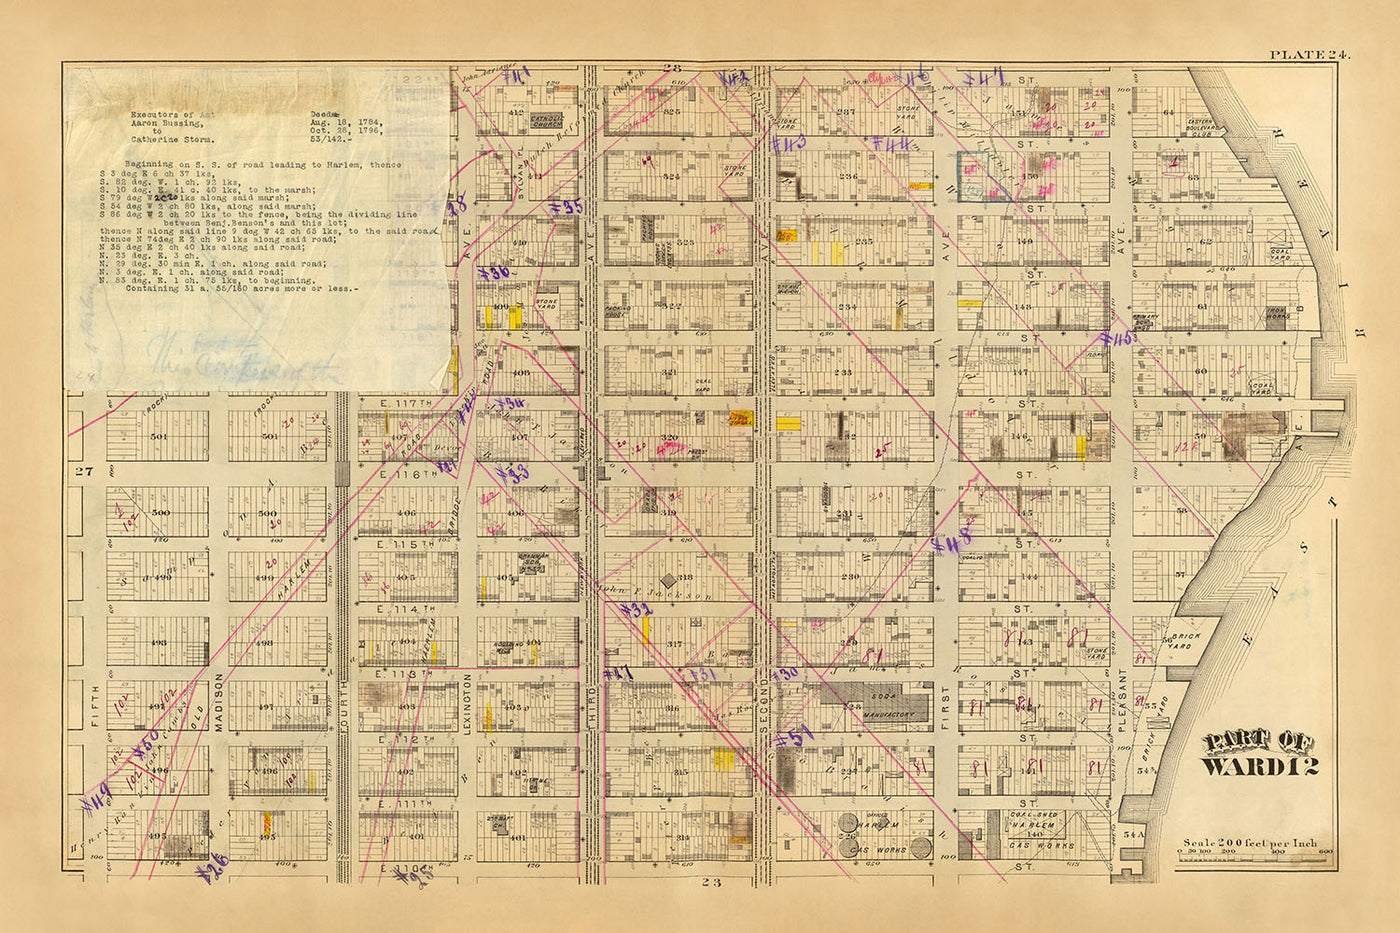 Ancienne carte d'East Harlem, New York par Bromley, 1879 : église catholique Saint-Paul, Harlem Gas Works.